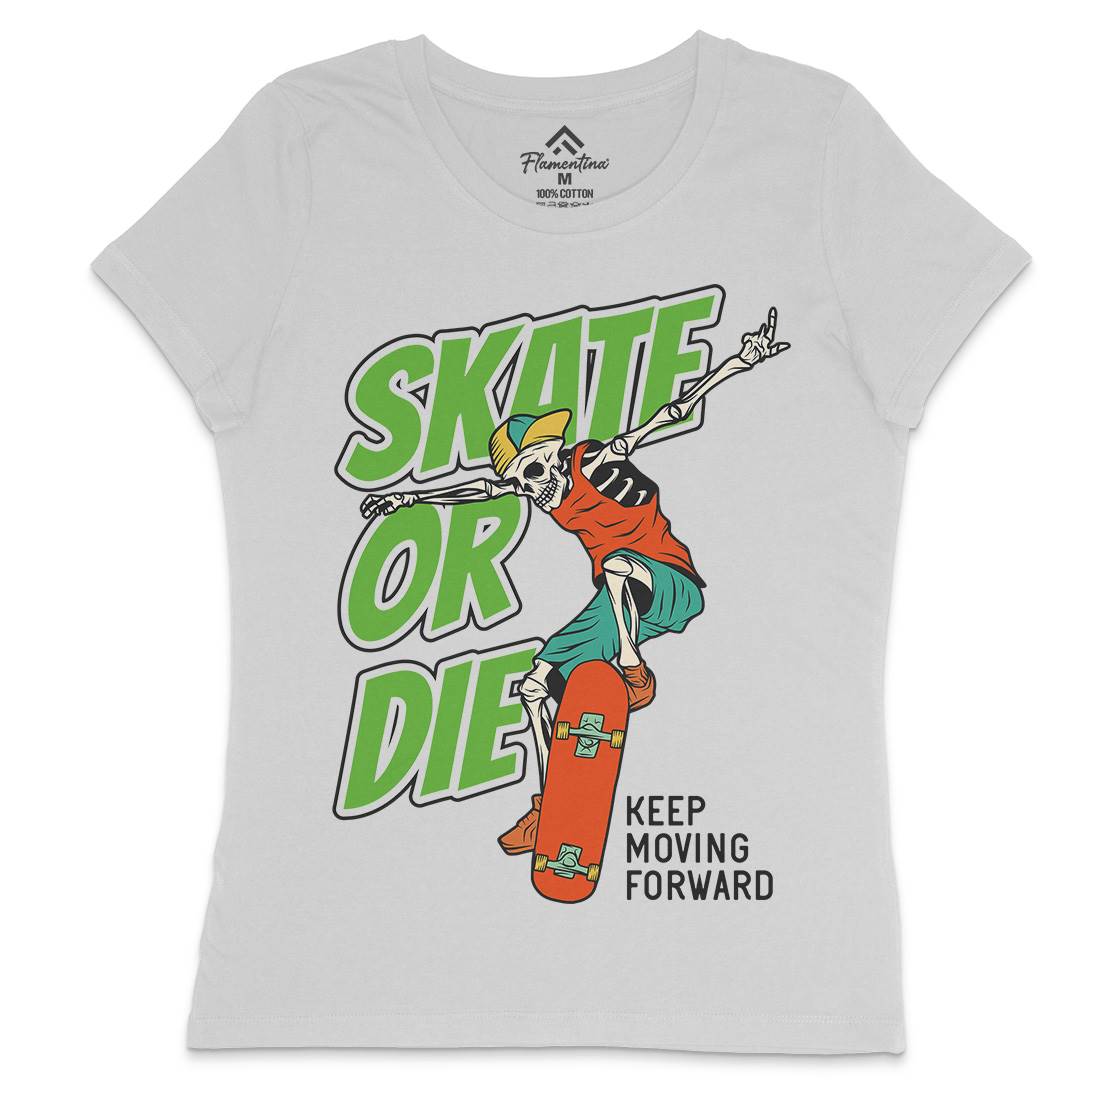 Or Die Womens Crew Neck T-Shirt Skate D971